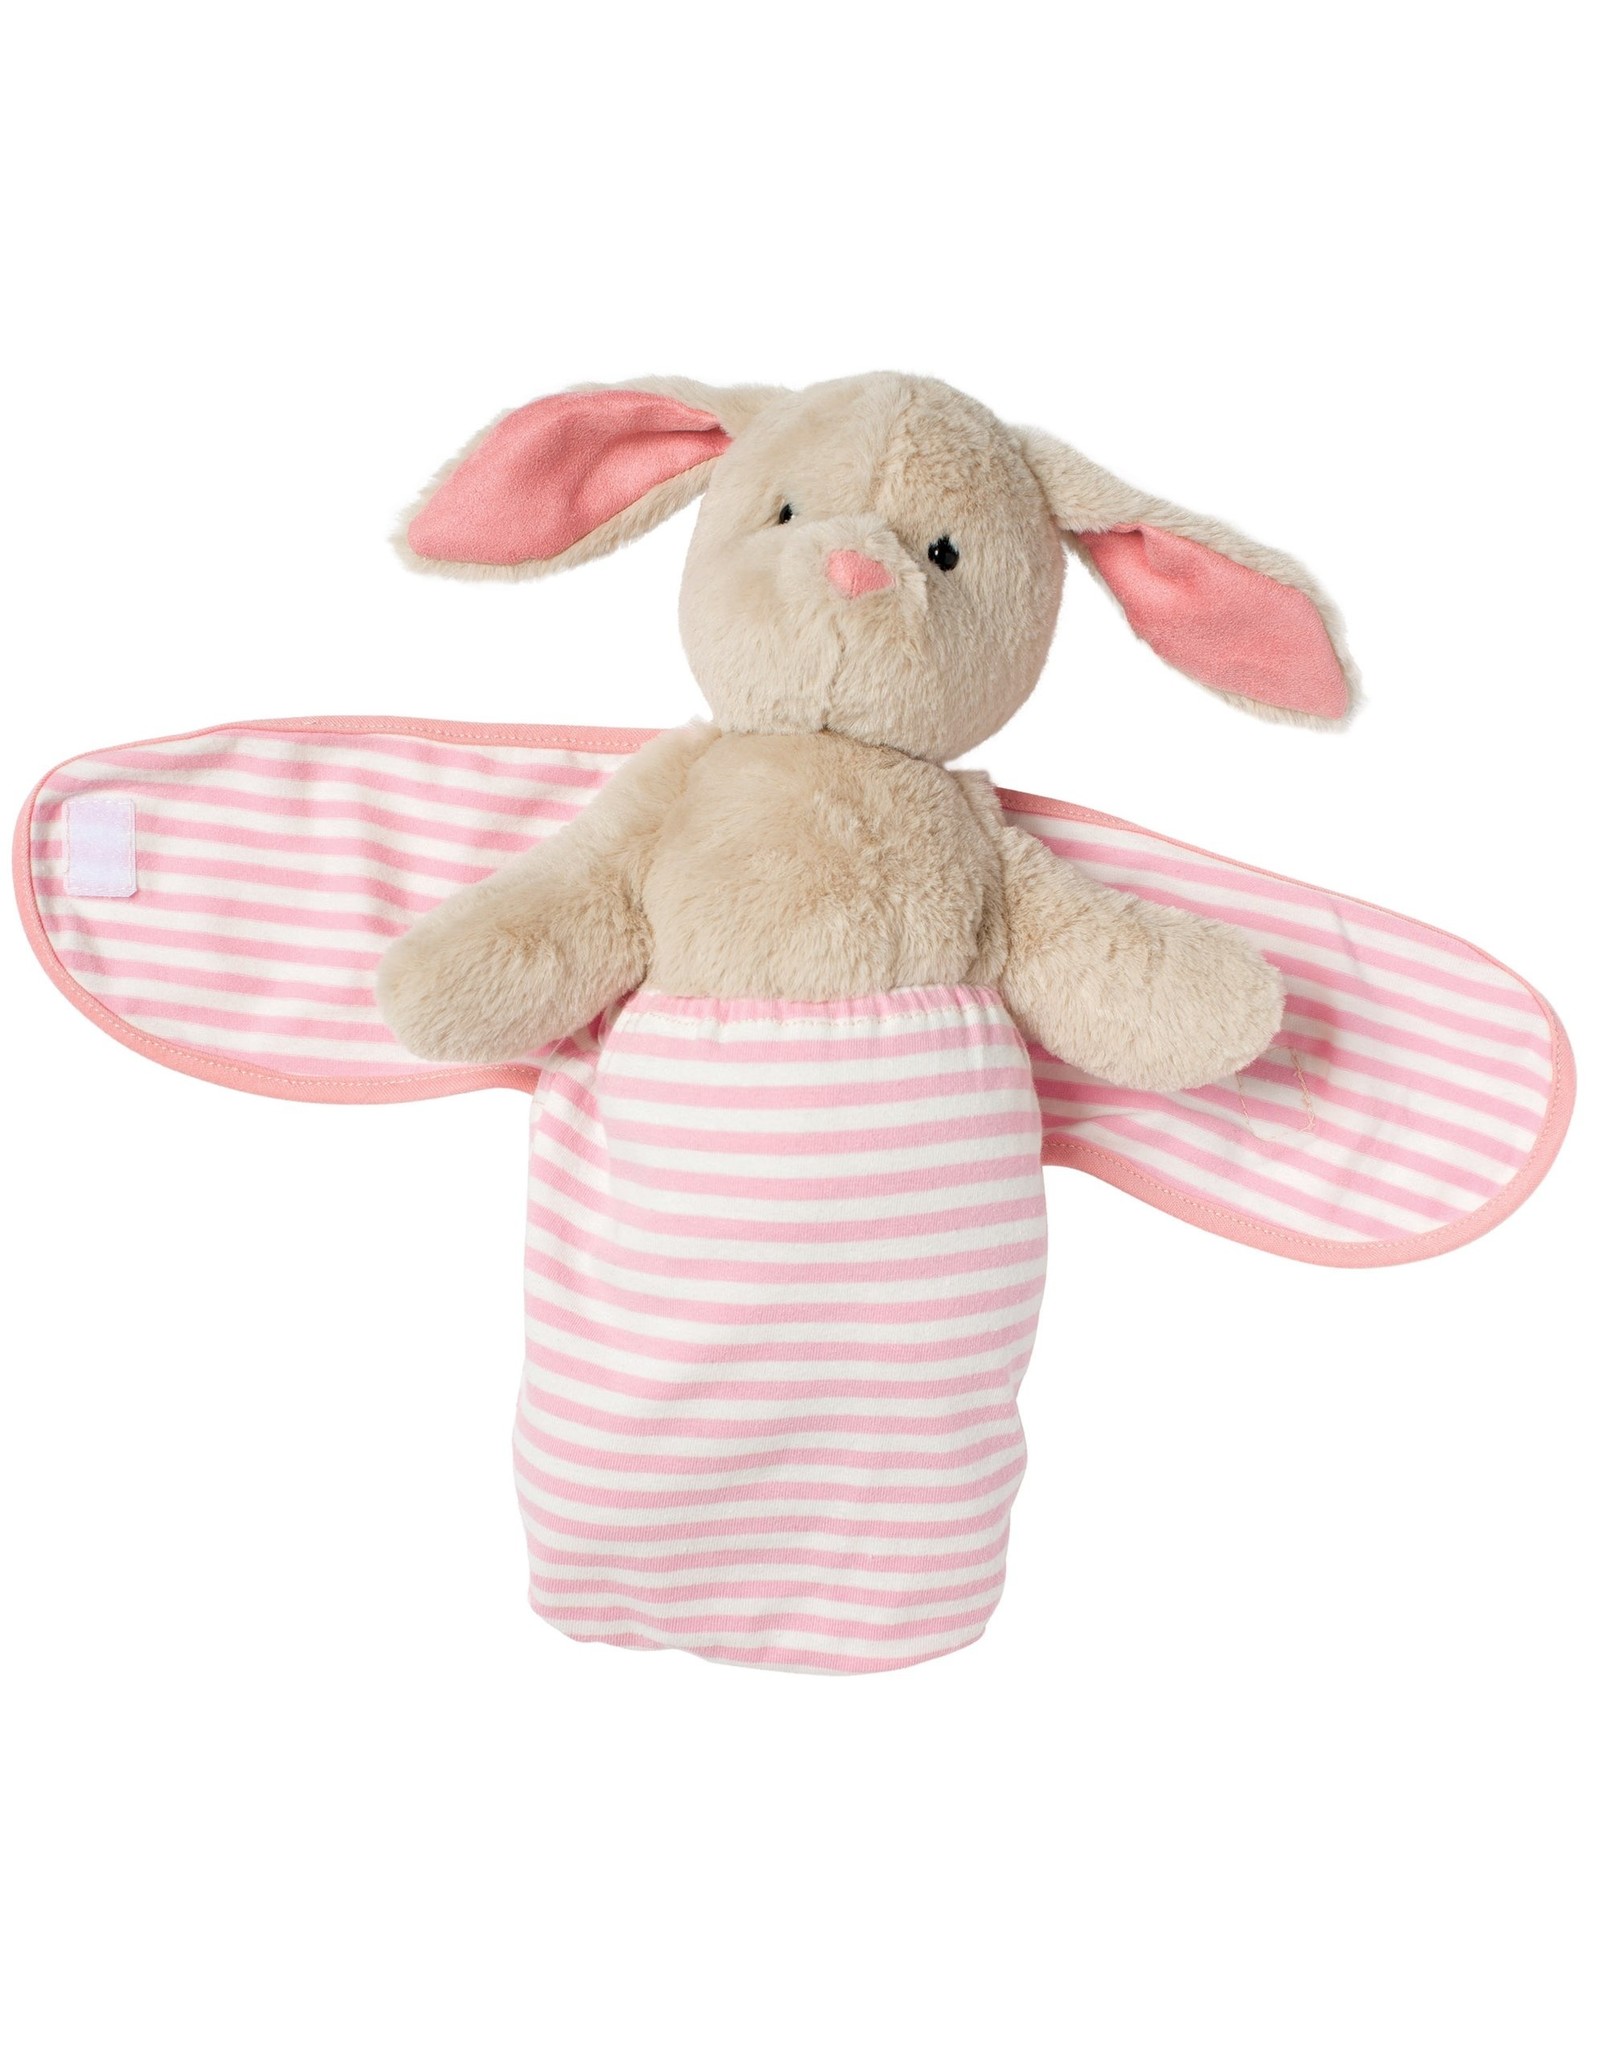 Manhattan Toy Company Swaddle Baby Bunny